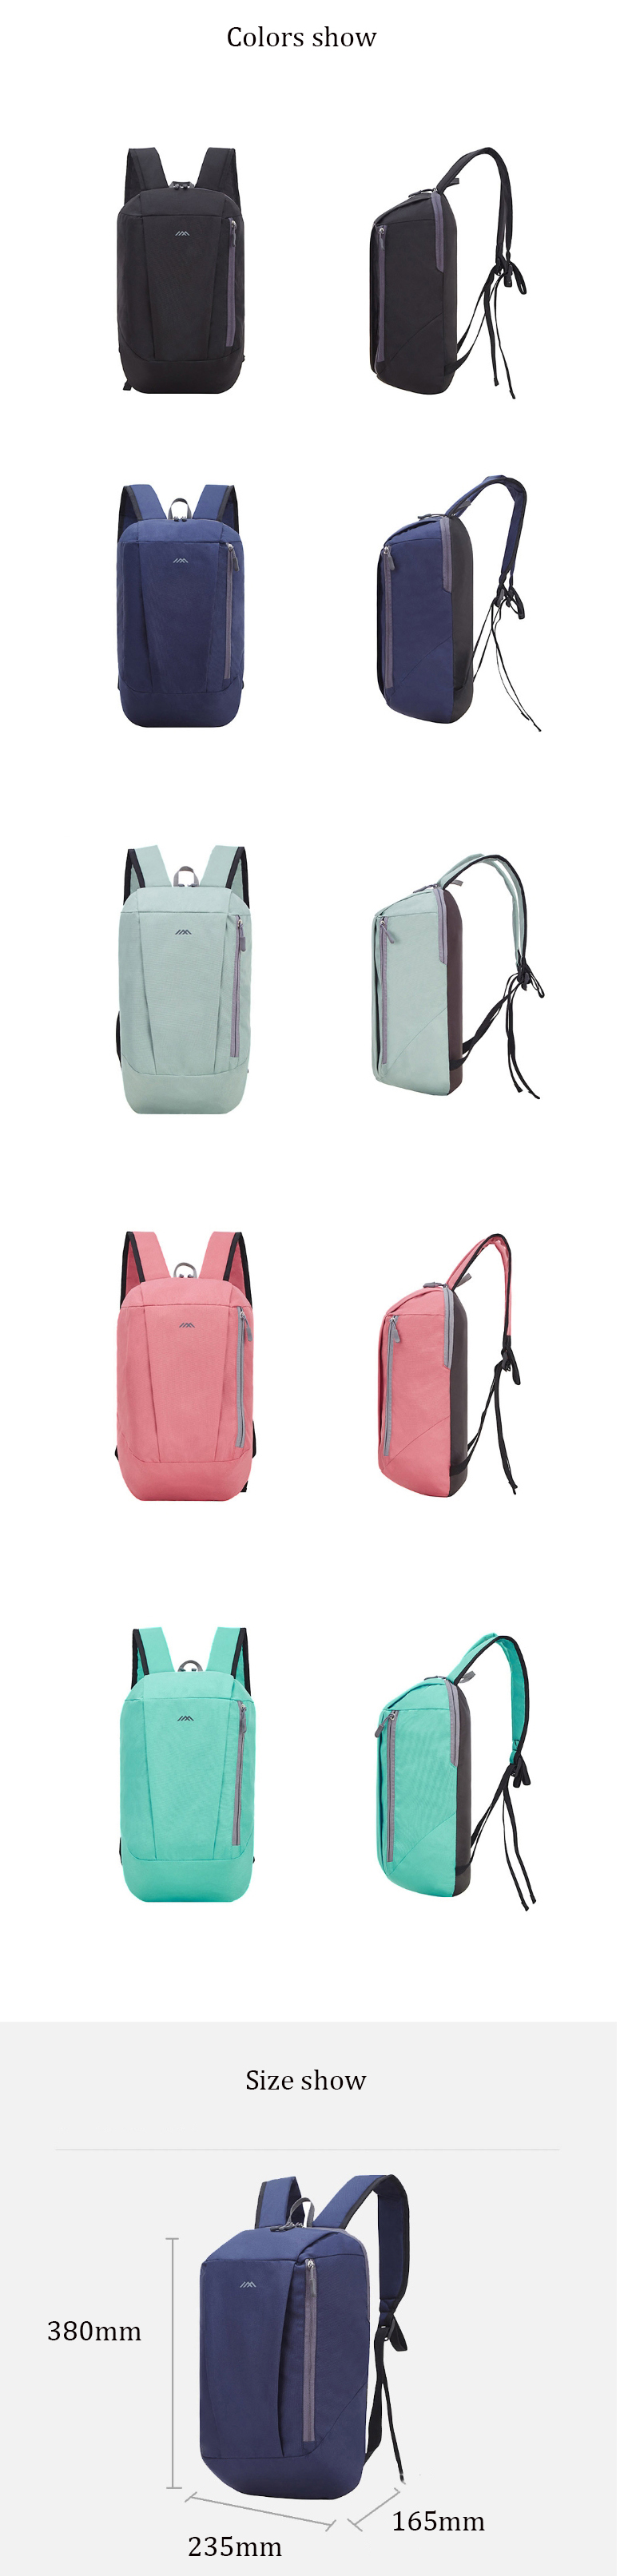 Xiaomi-Extrek-13L-Folding-Backpack-Waterproof-Camping-Travel-Bag-Men-Women-Sports-Bag-1575034-5